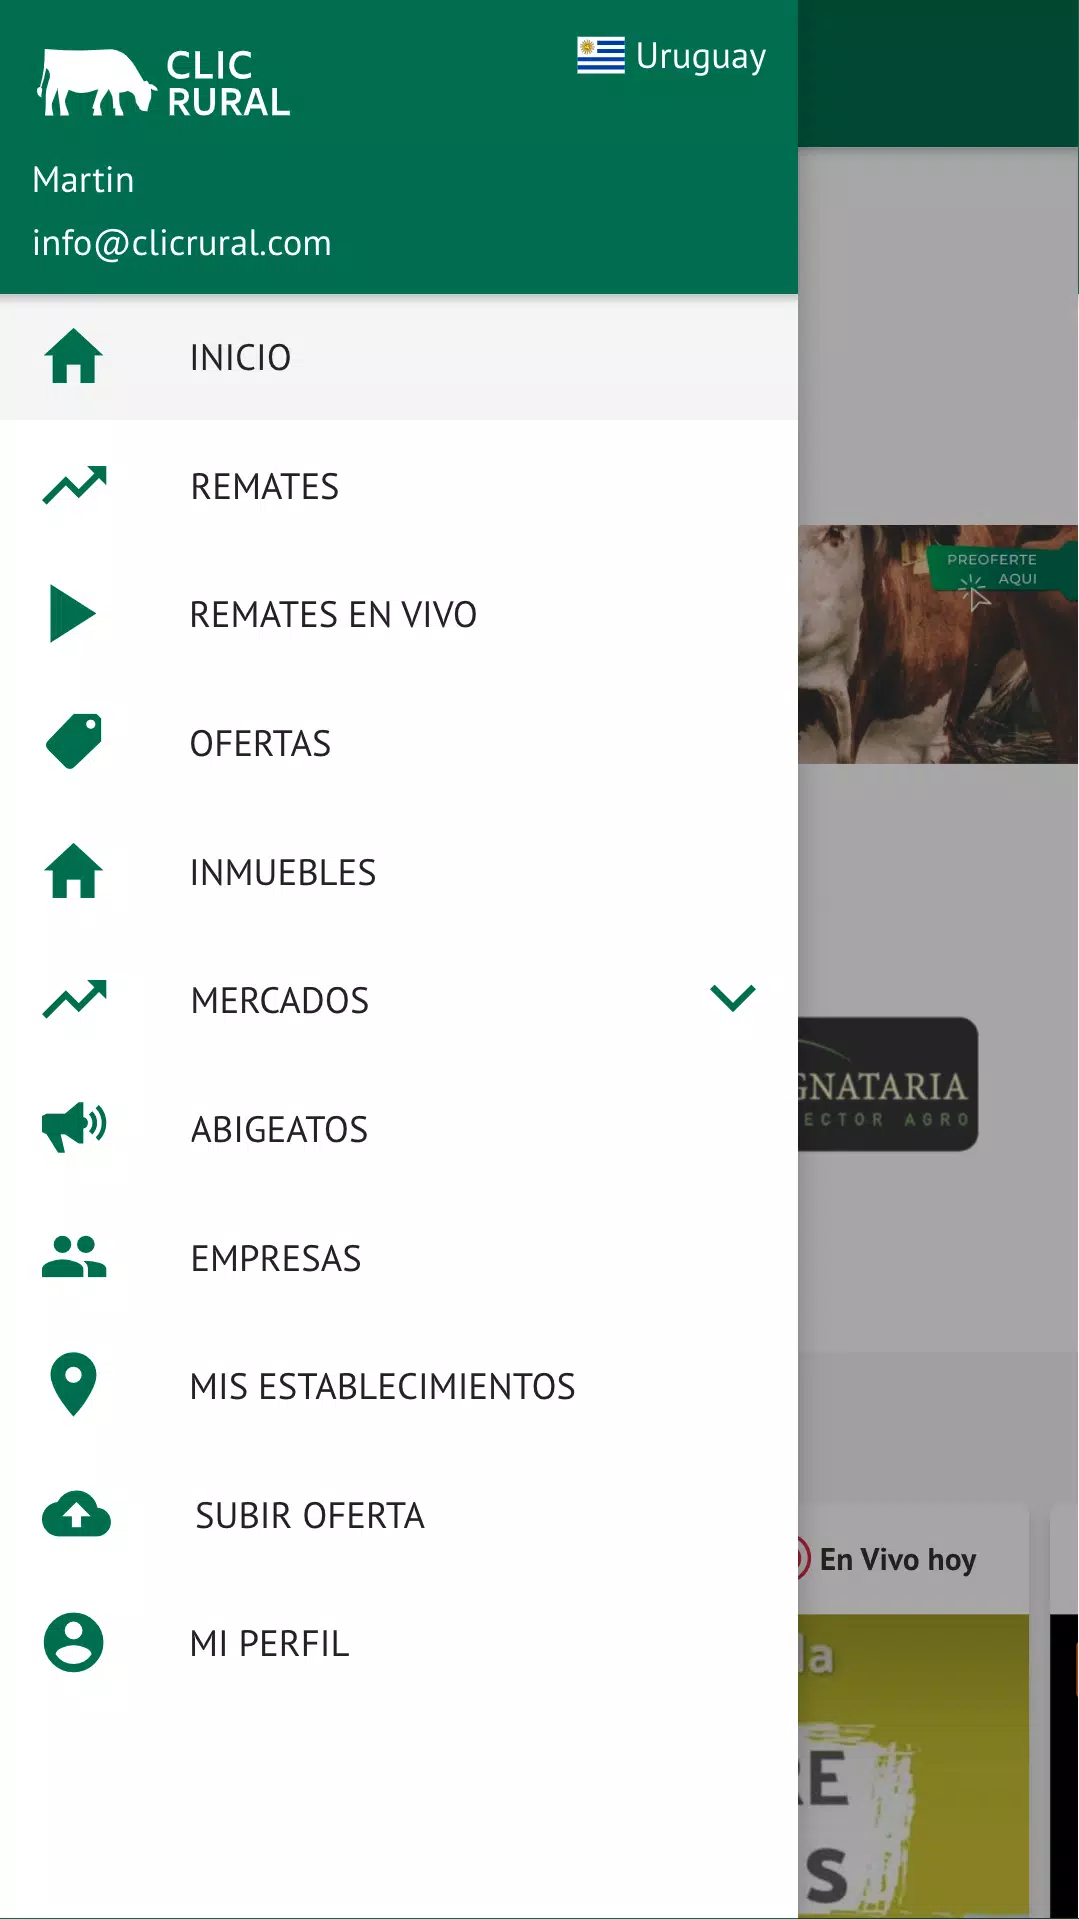 Download do APK de Lance Rural para Android